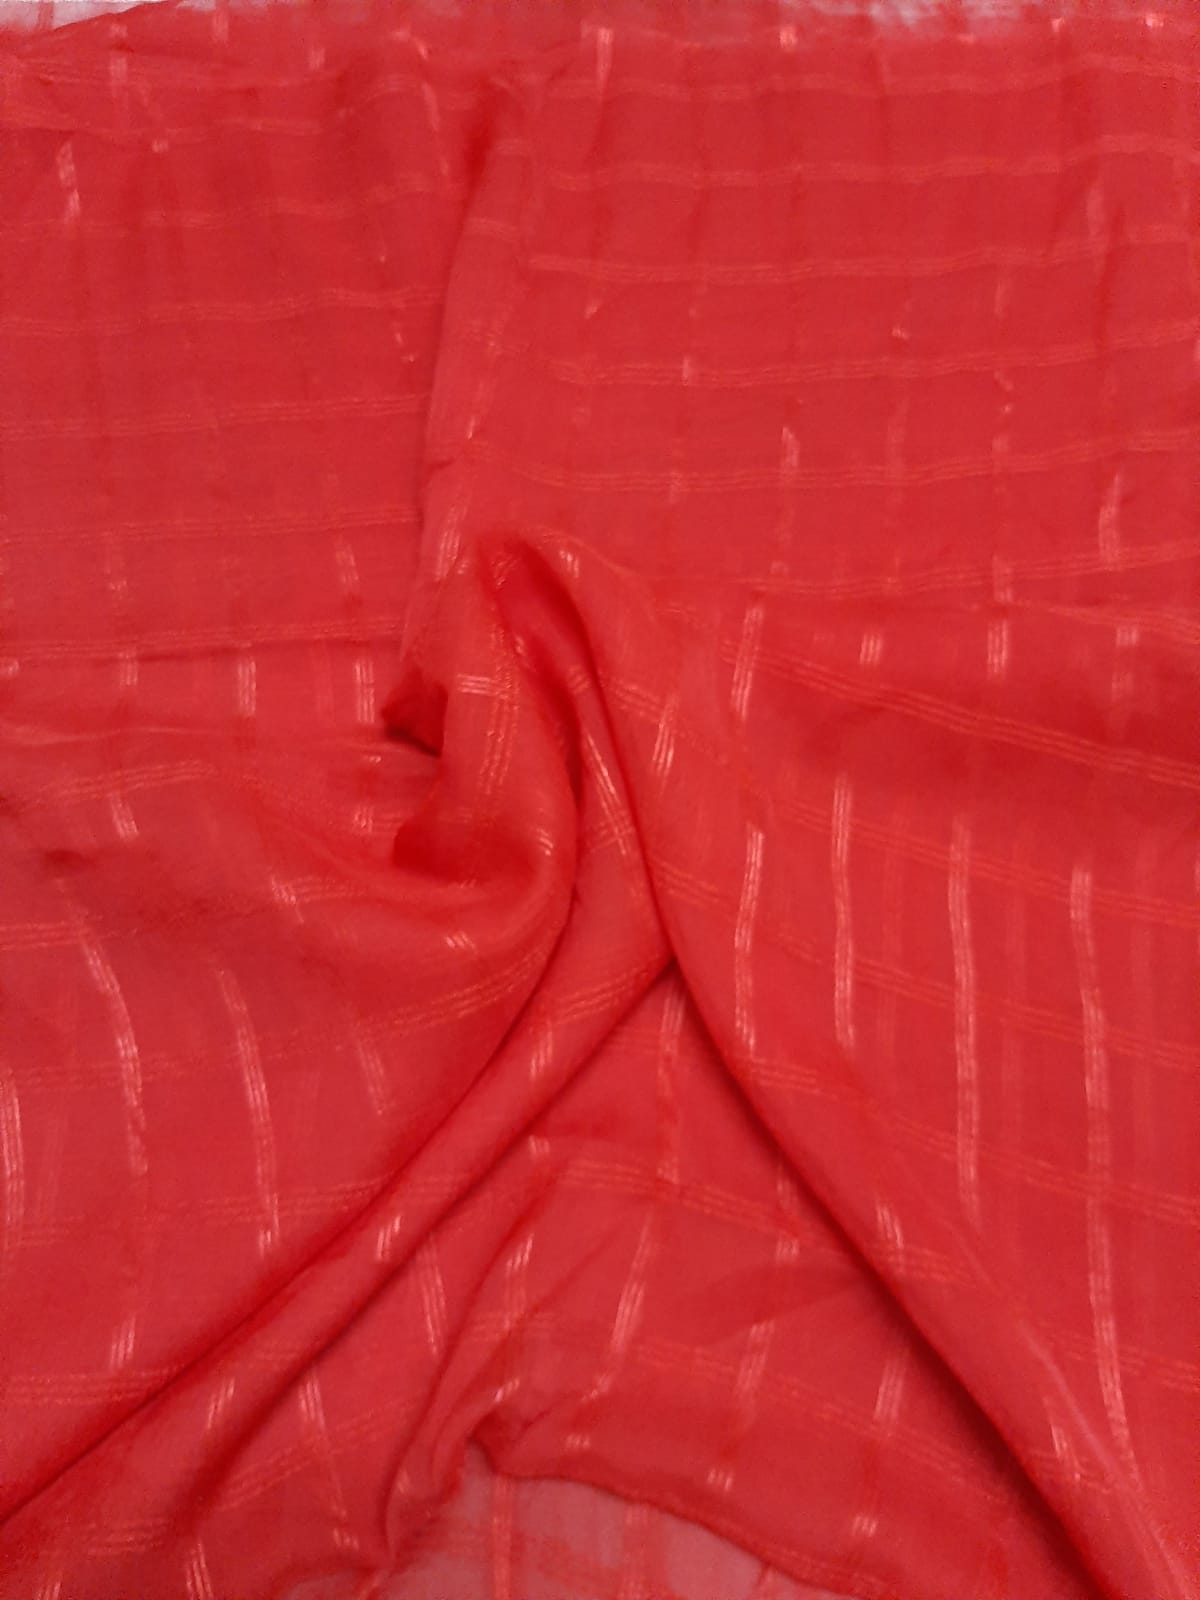 Red Checks Print Chiffon Fabric